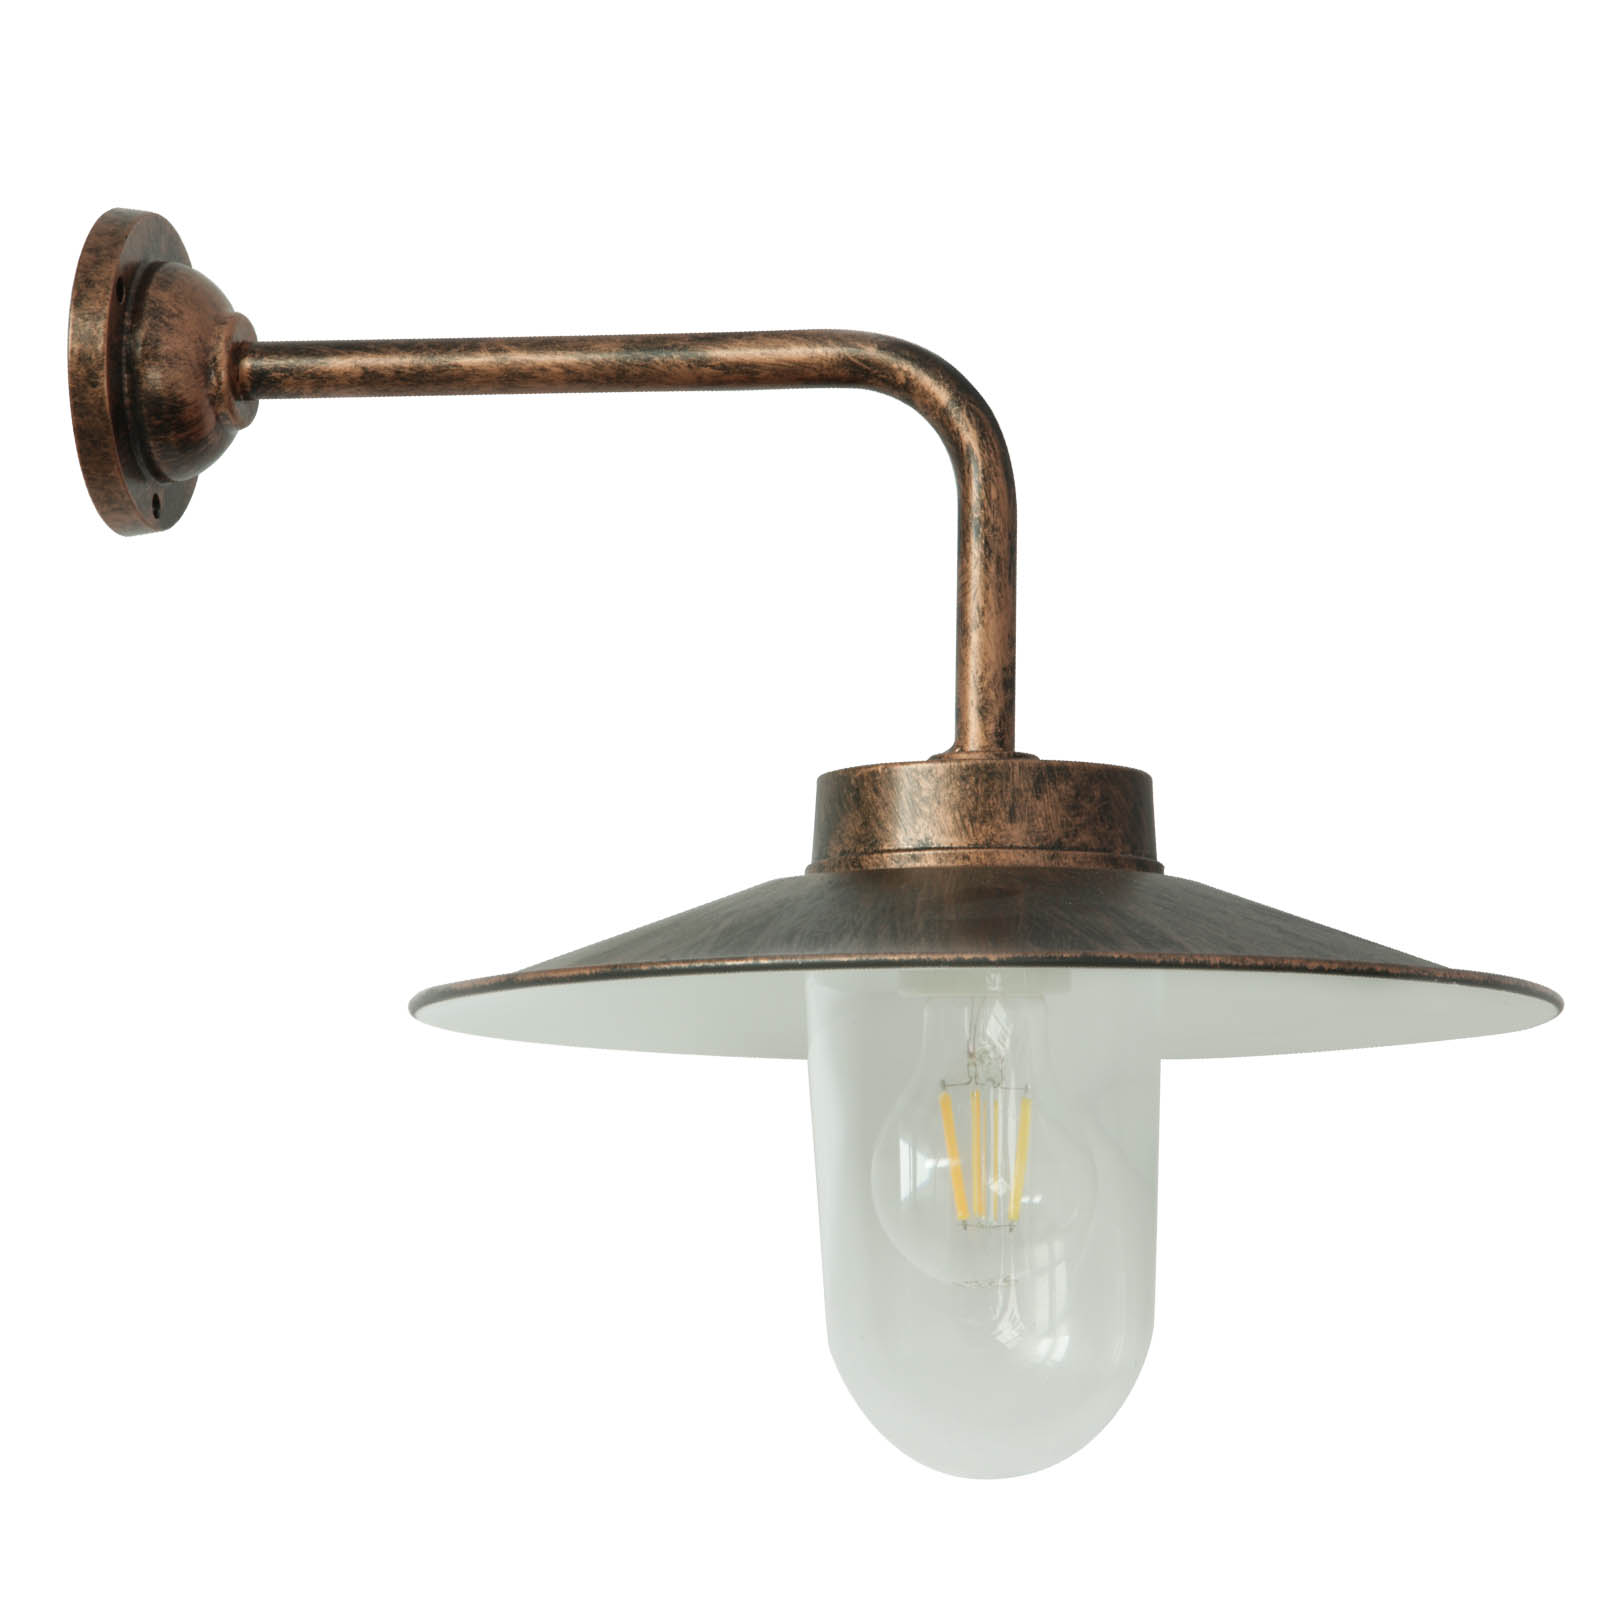 Classical Barn Lamp 38-90 in Antique Colors: Kupferschwarzfarben mit klarem Zylinderglas